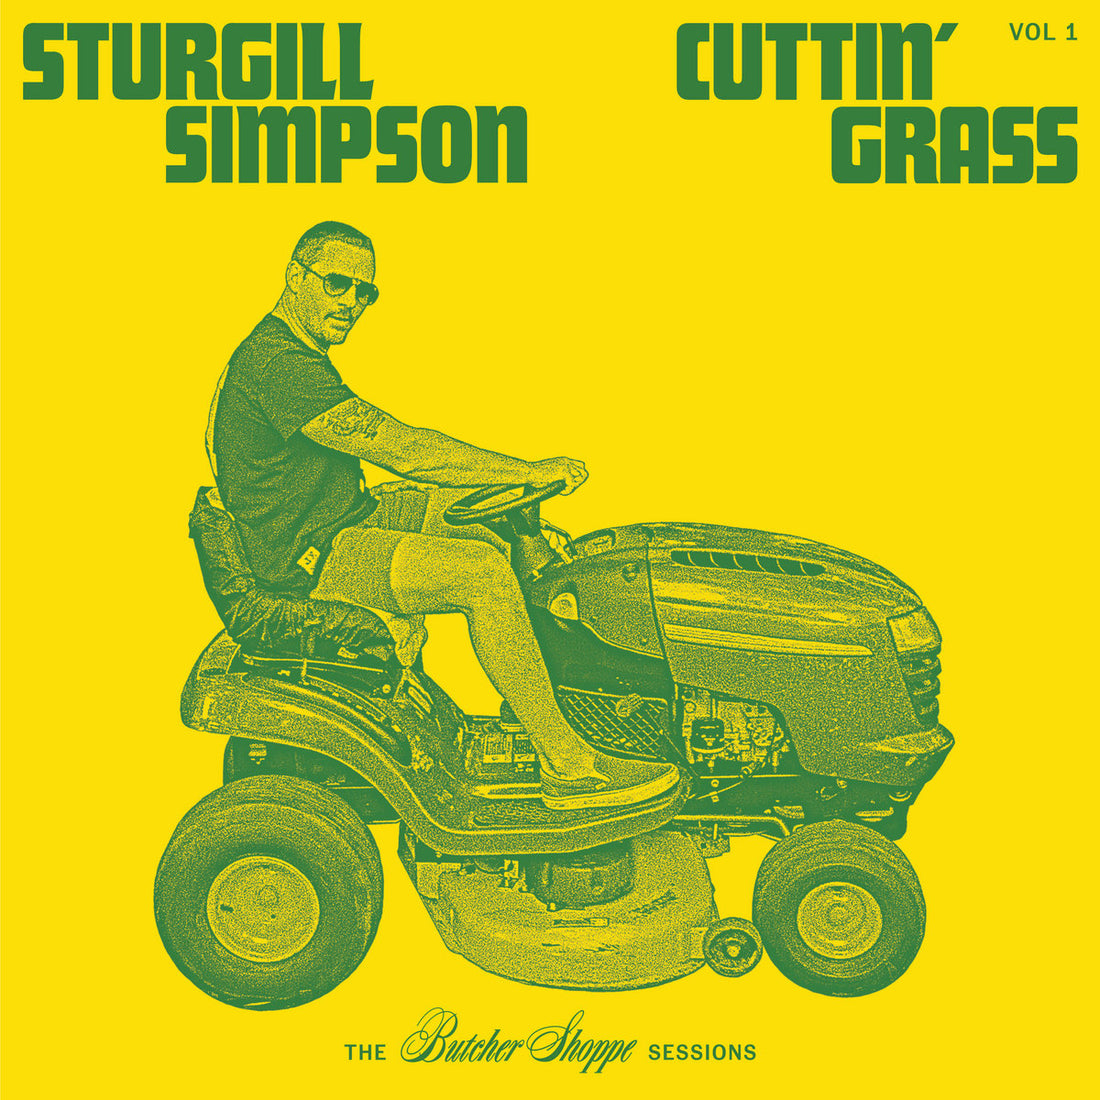 Sturgill Simpson- Cuttin Grass